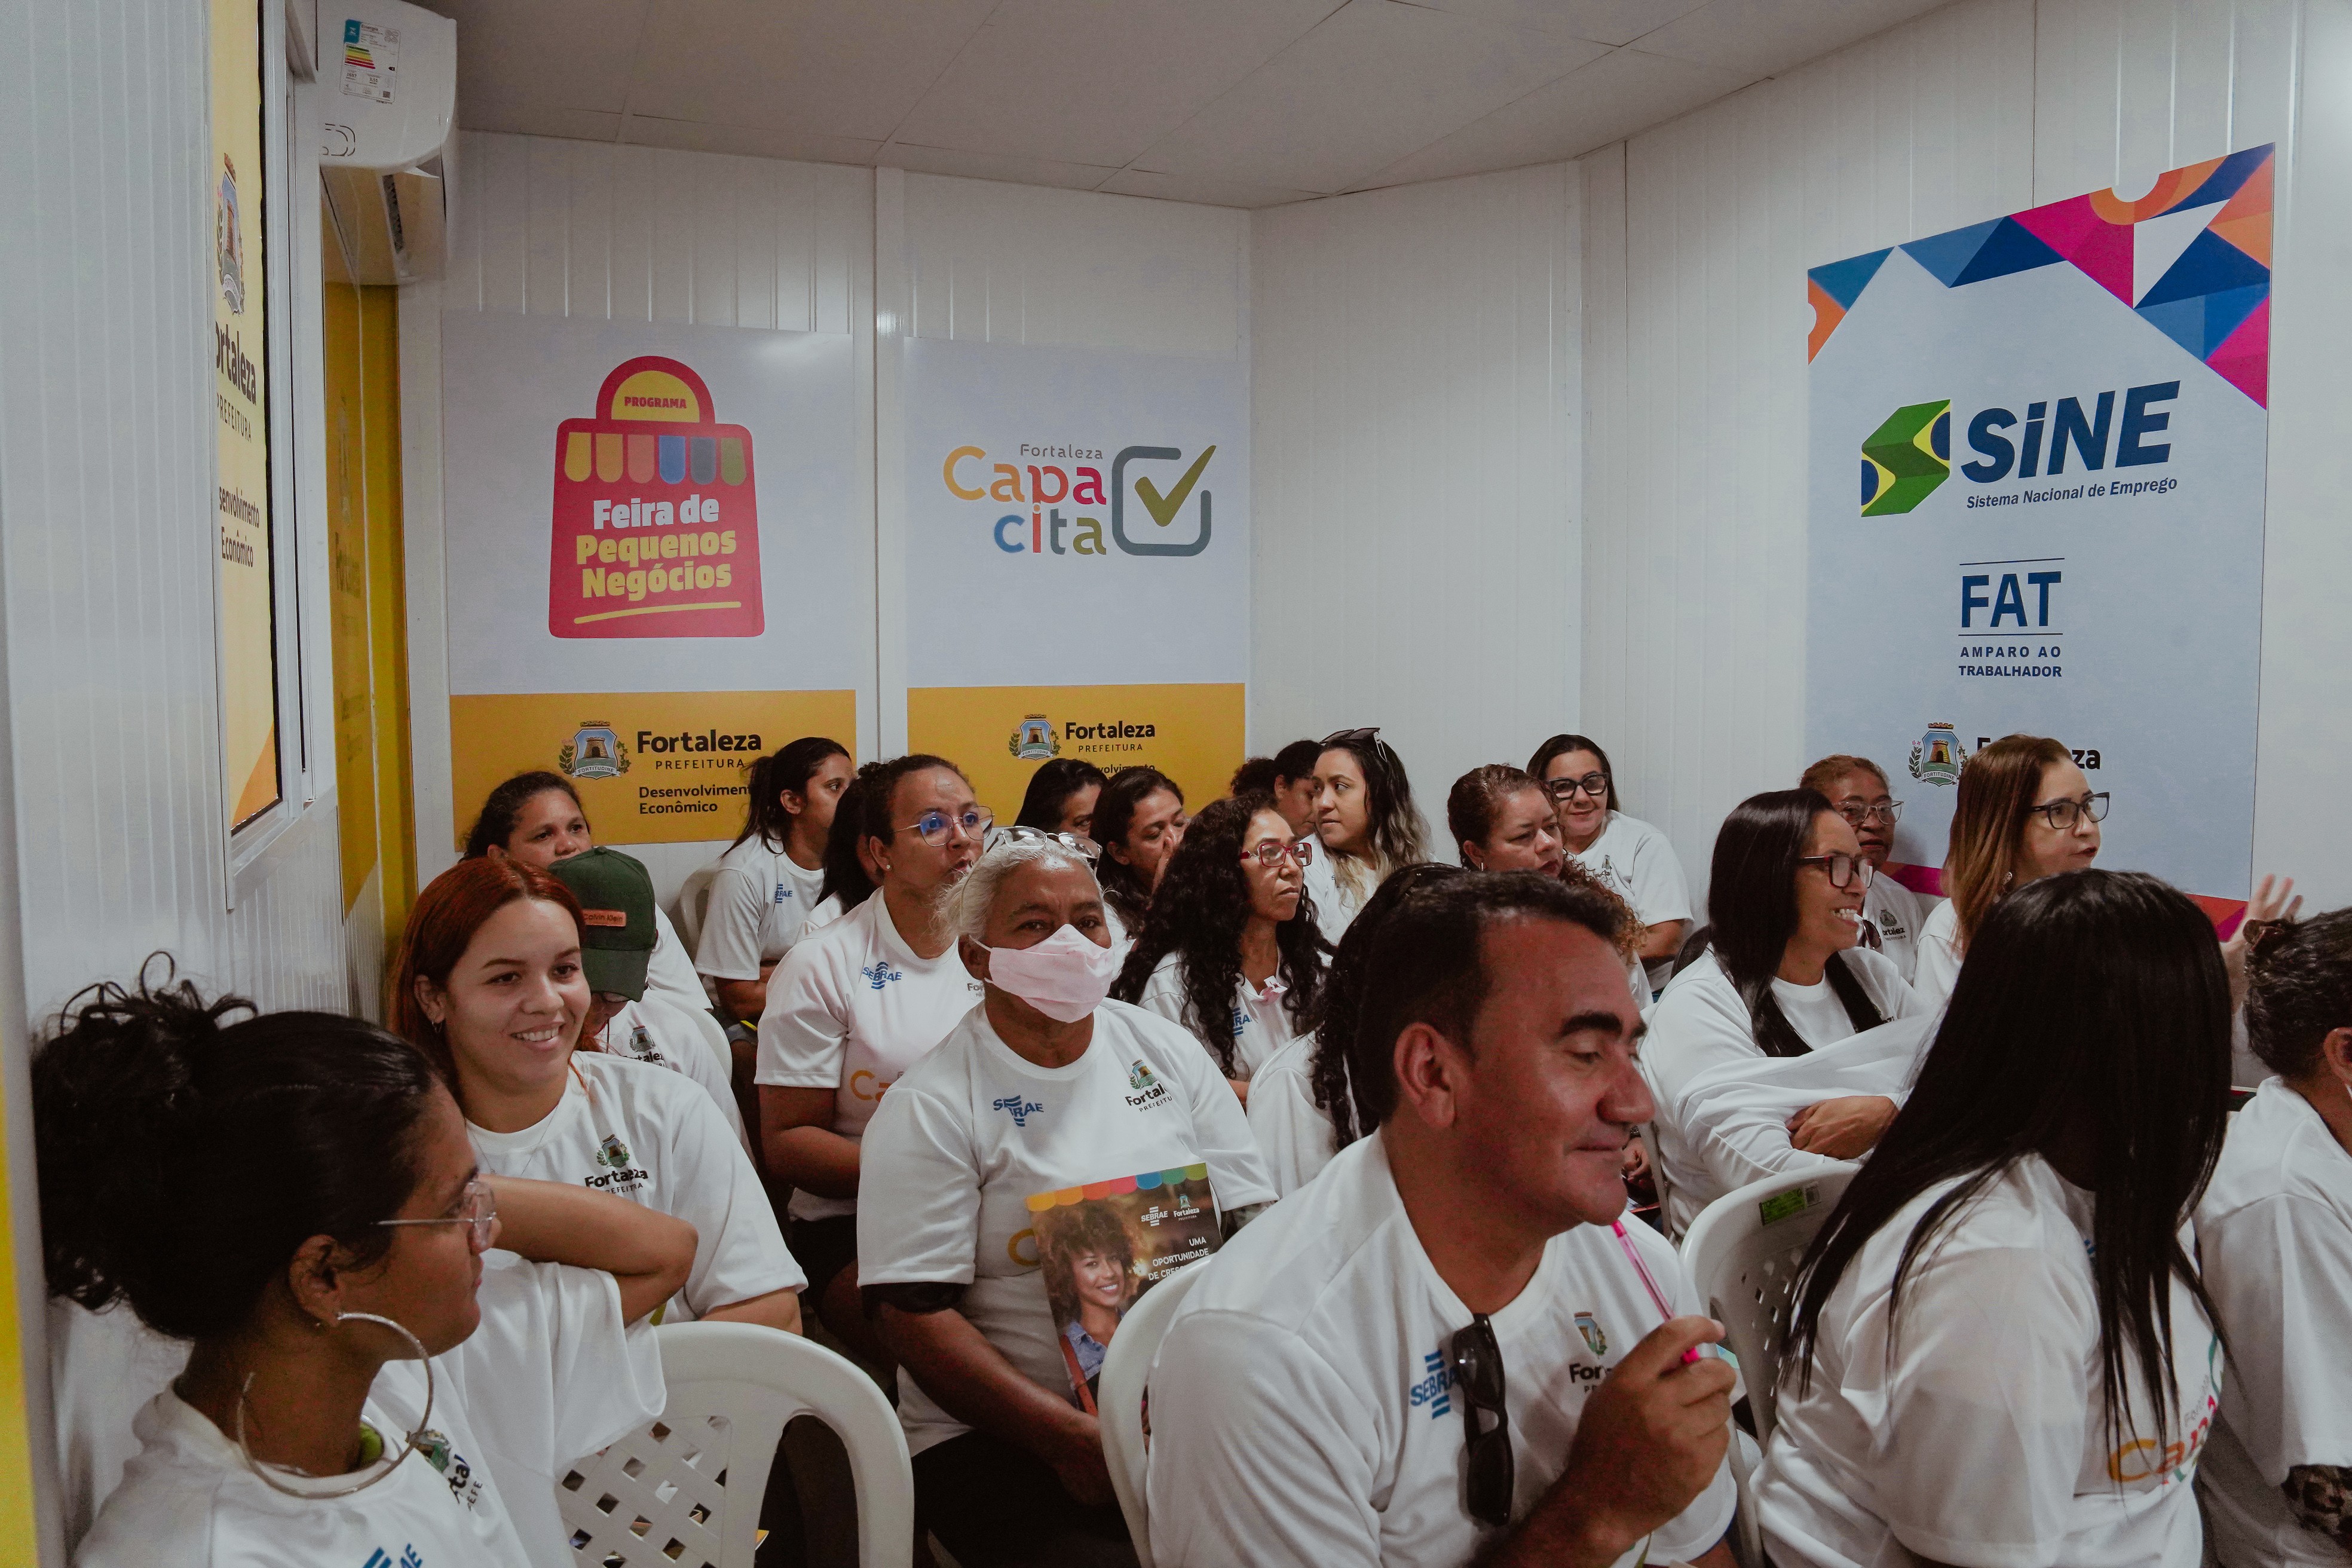 Programa oferta 650 vagas de cursos gratuitos para empreendedores locais em Fortaleza; confira